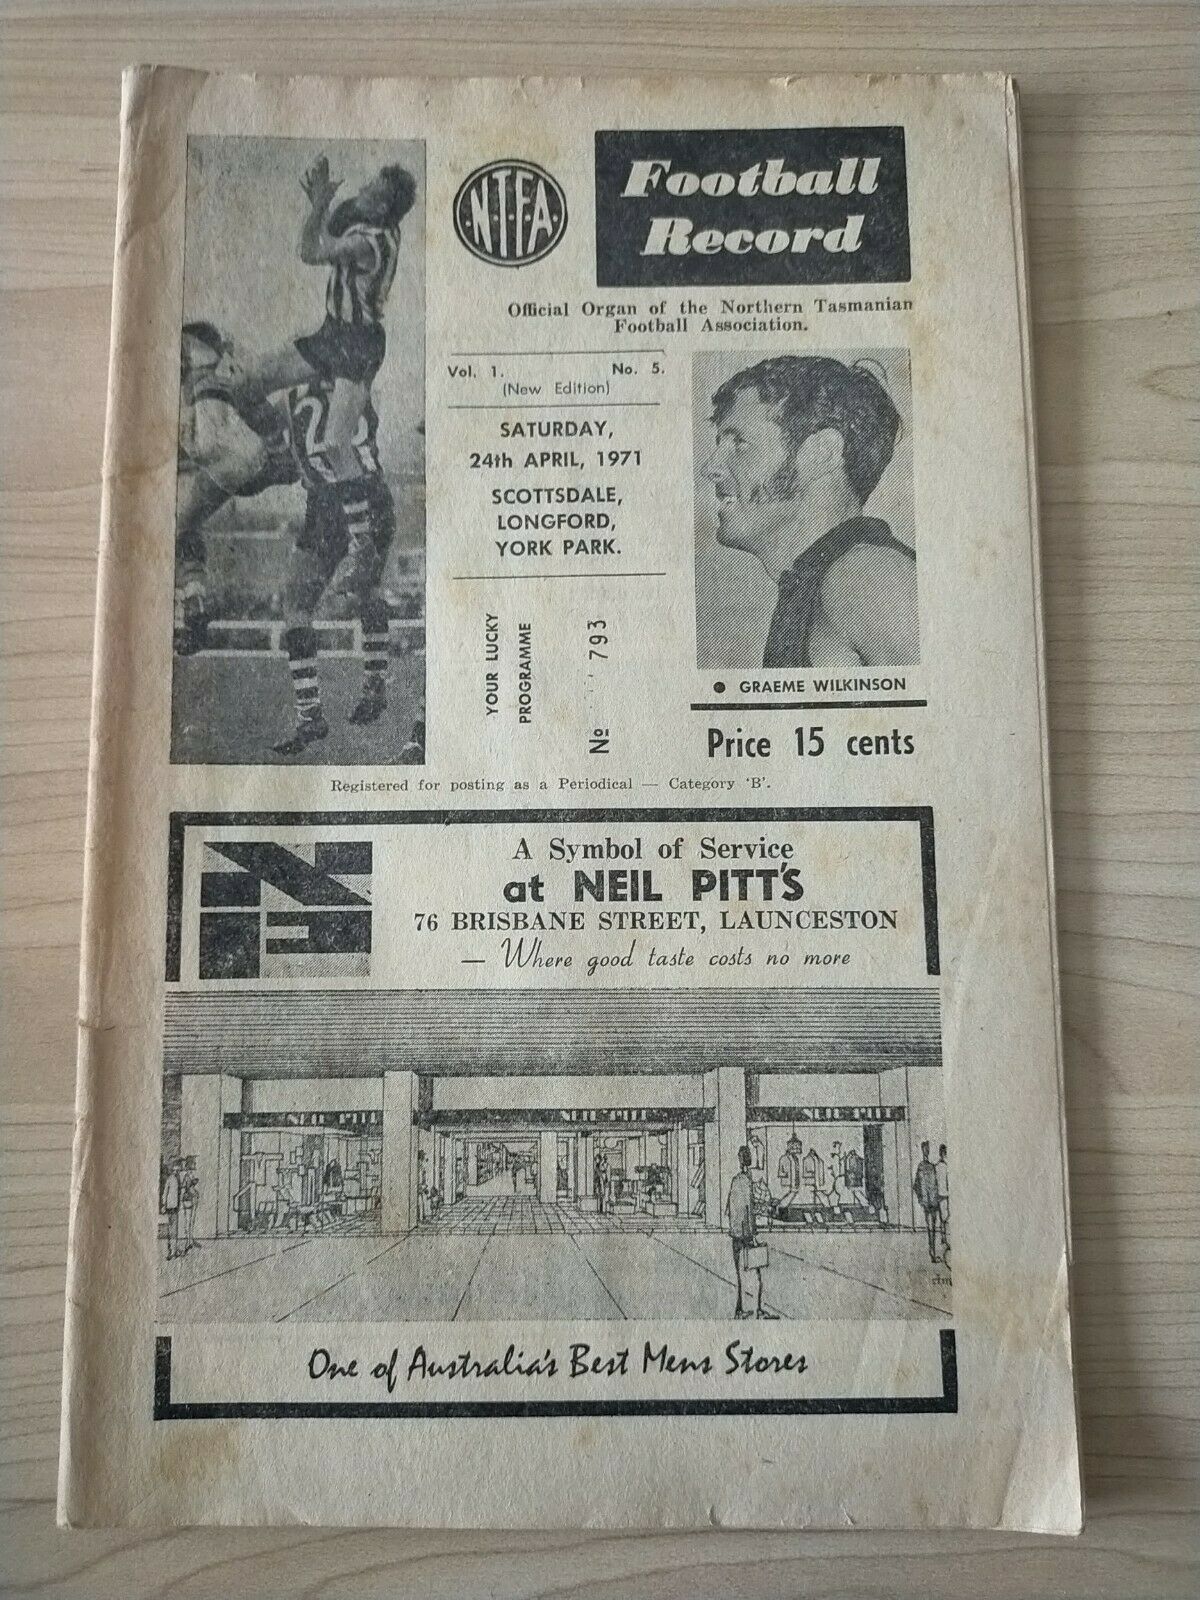 Northern Tasmania Football Association Saturday 24th April 1971 Football Record